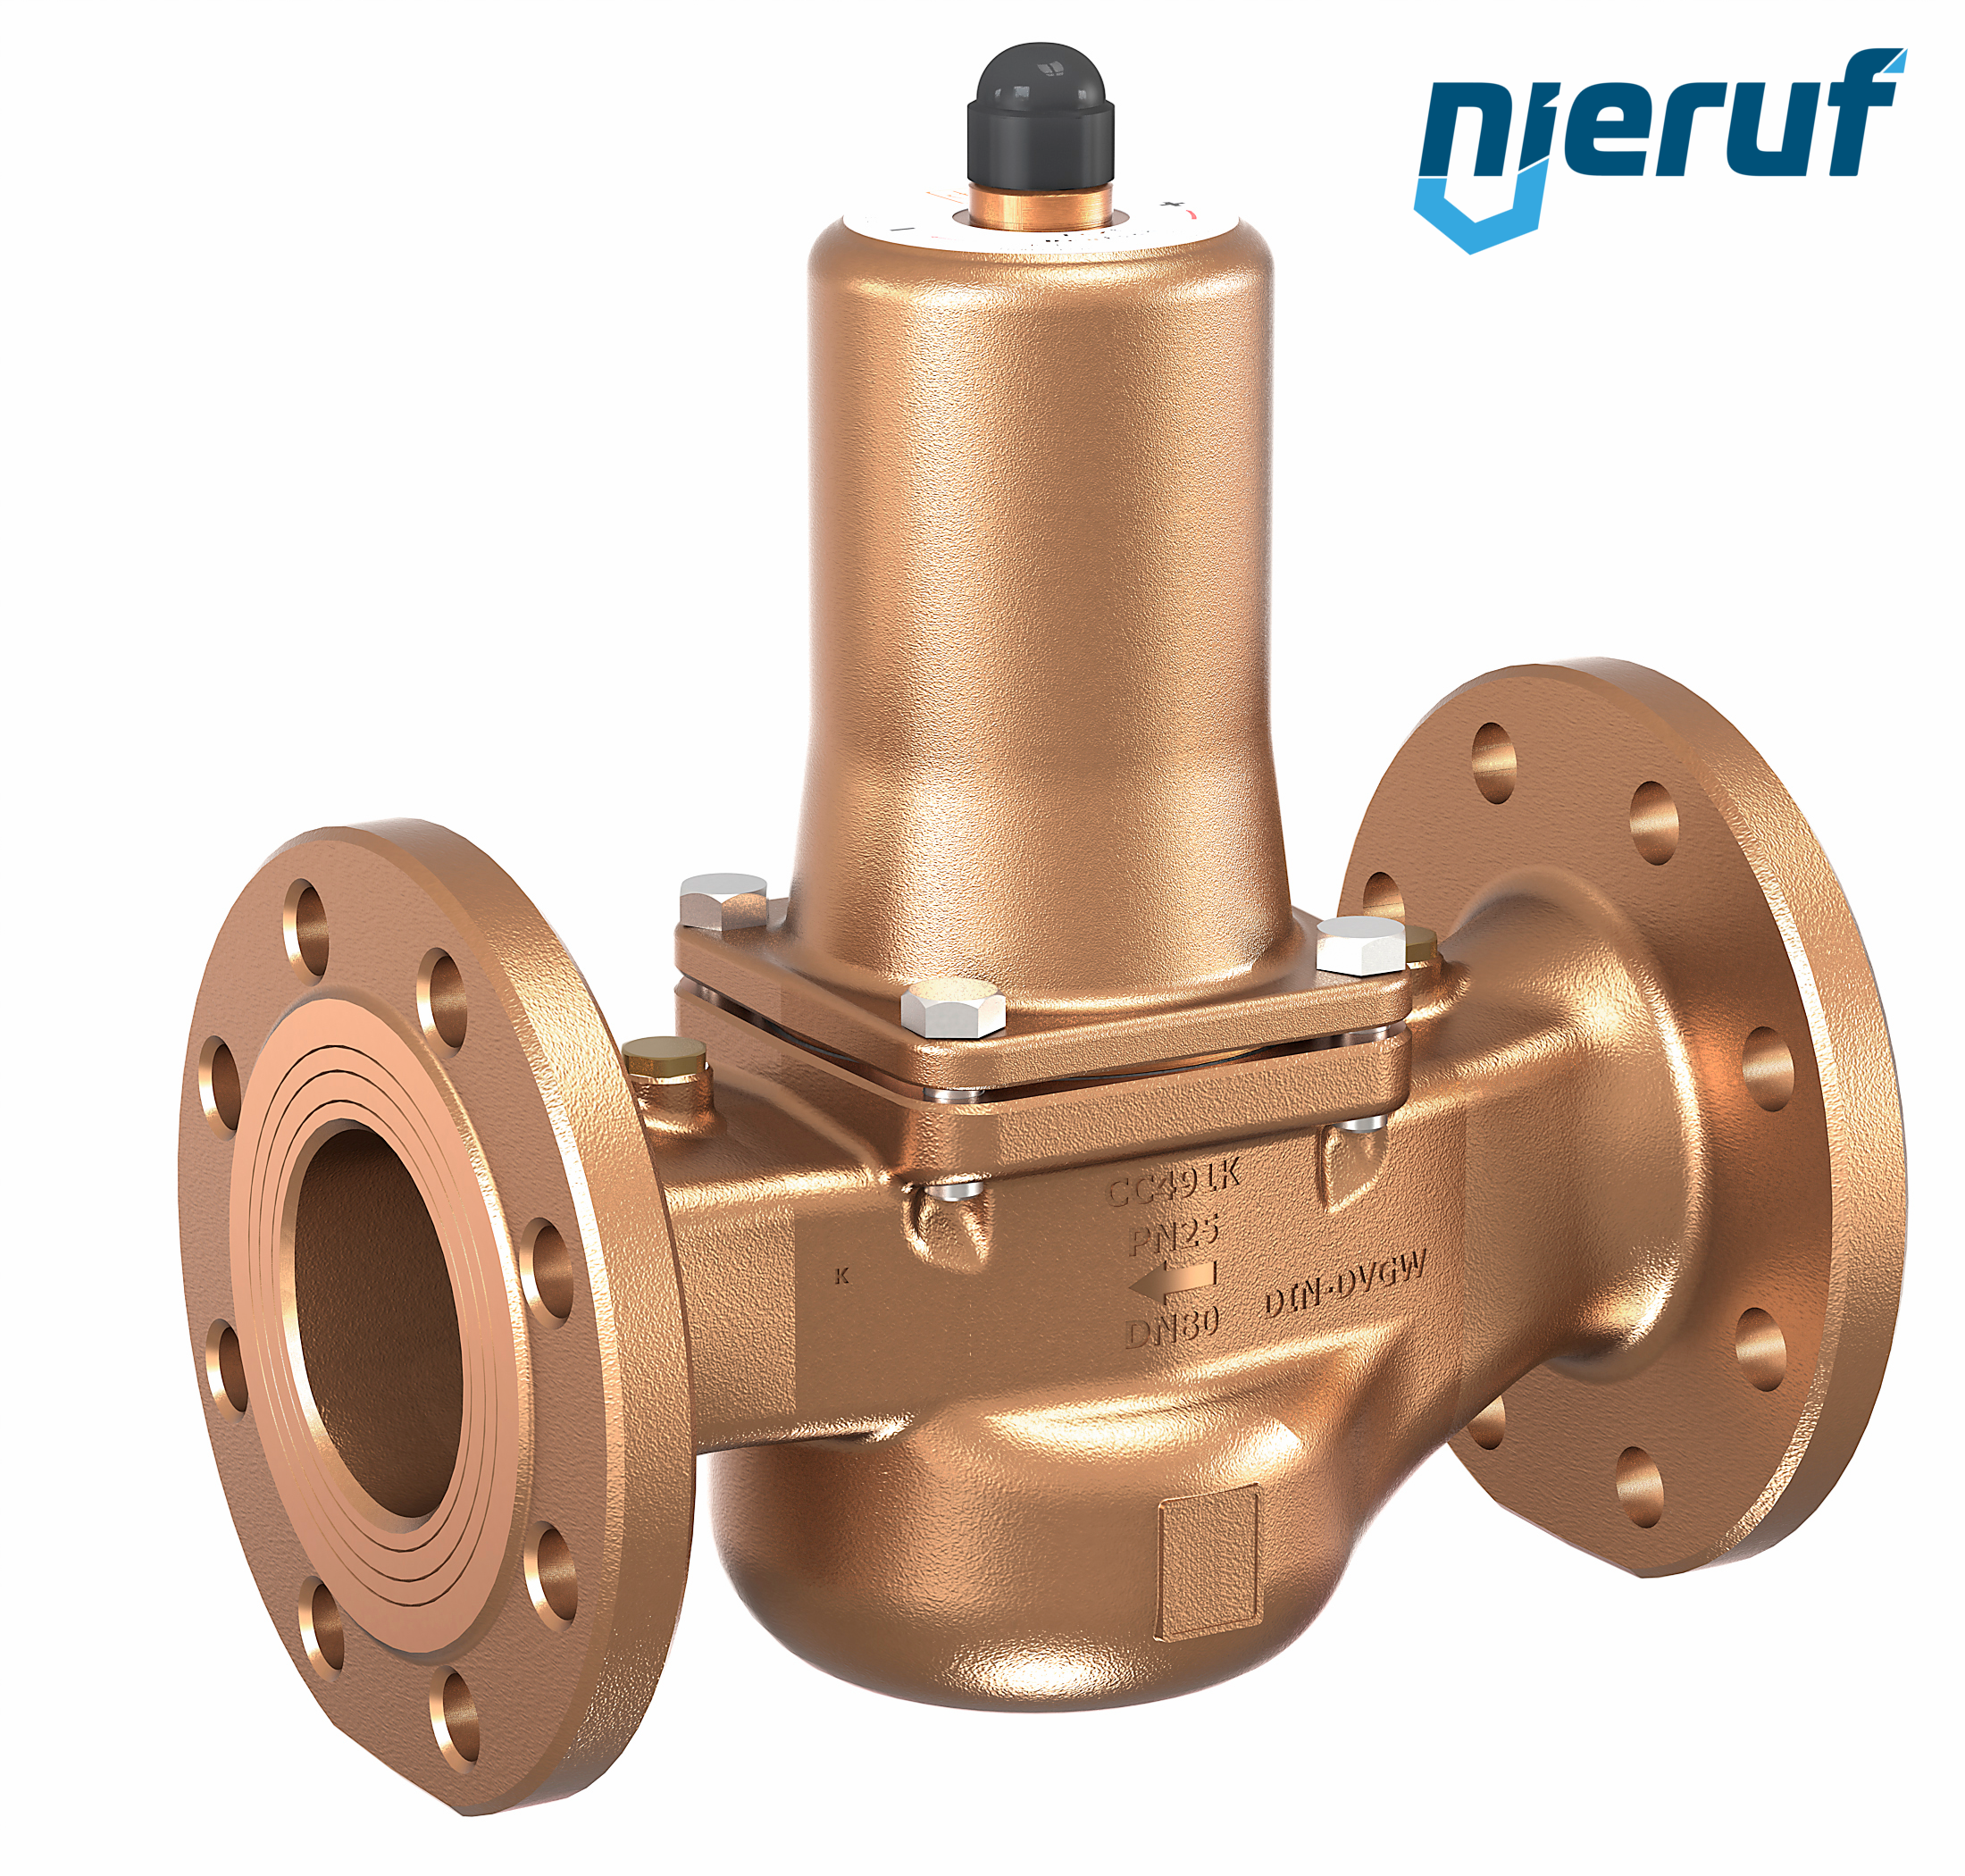 flange overflow valve DN 25 PN40 UV09 gunmetal/brass 5,5 - 10,0 bar